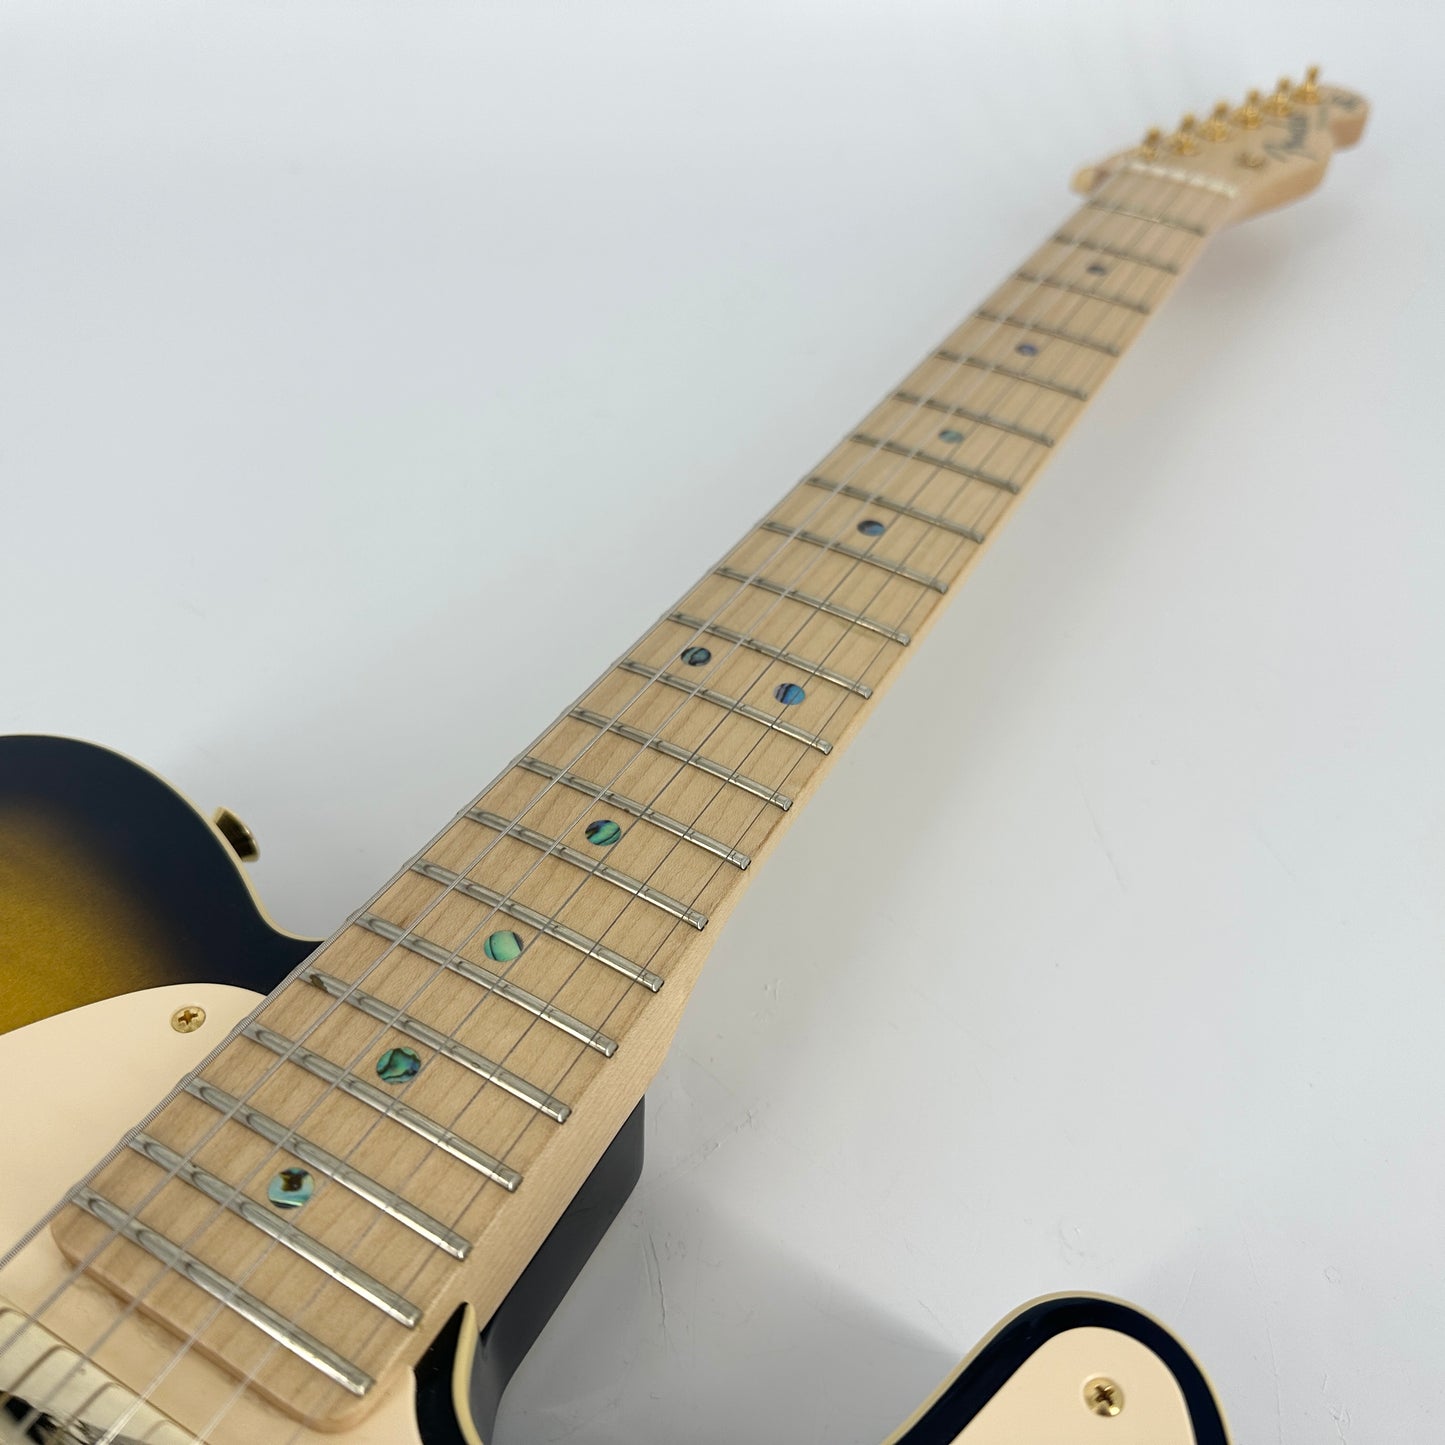 2017 Fender Richie Kotzen Telecaster - Brown Sunburst